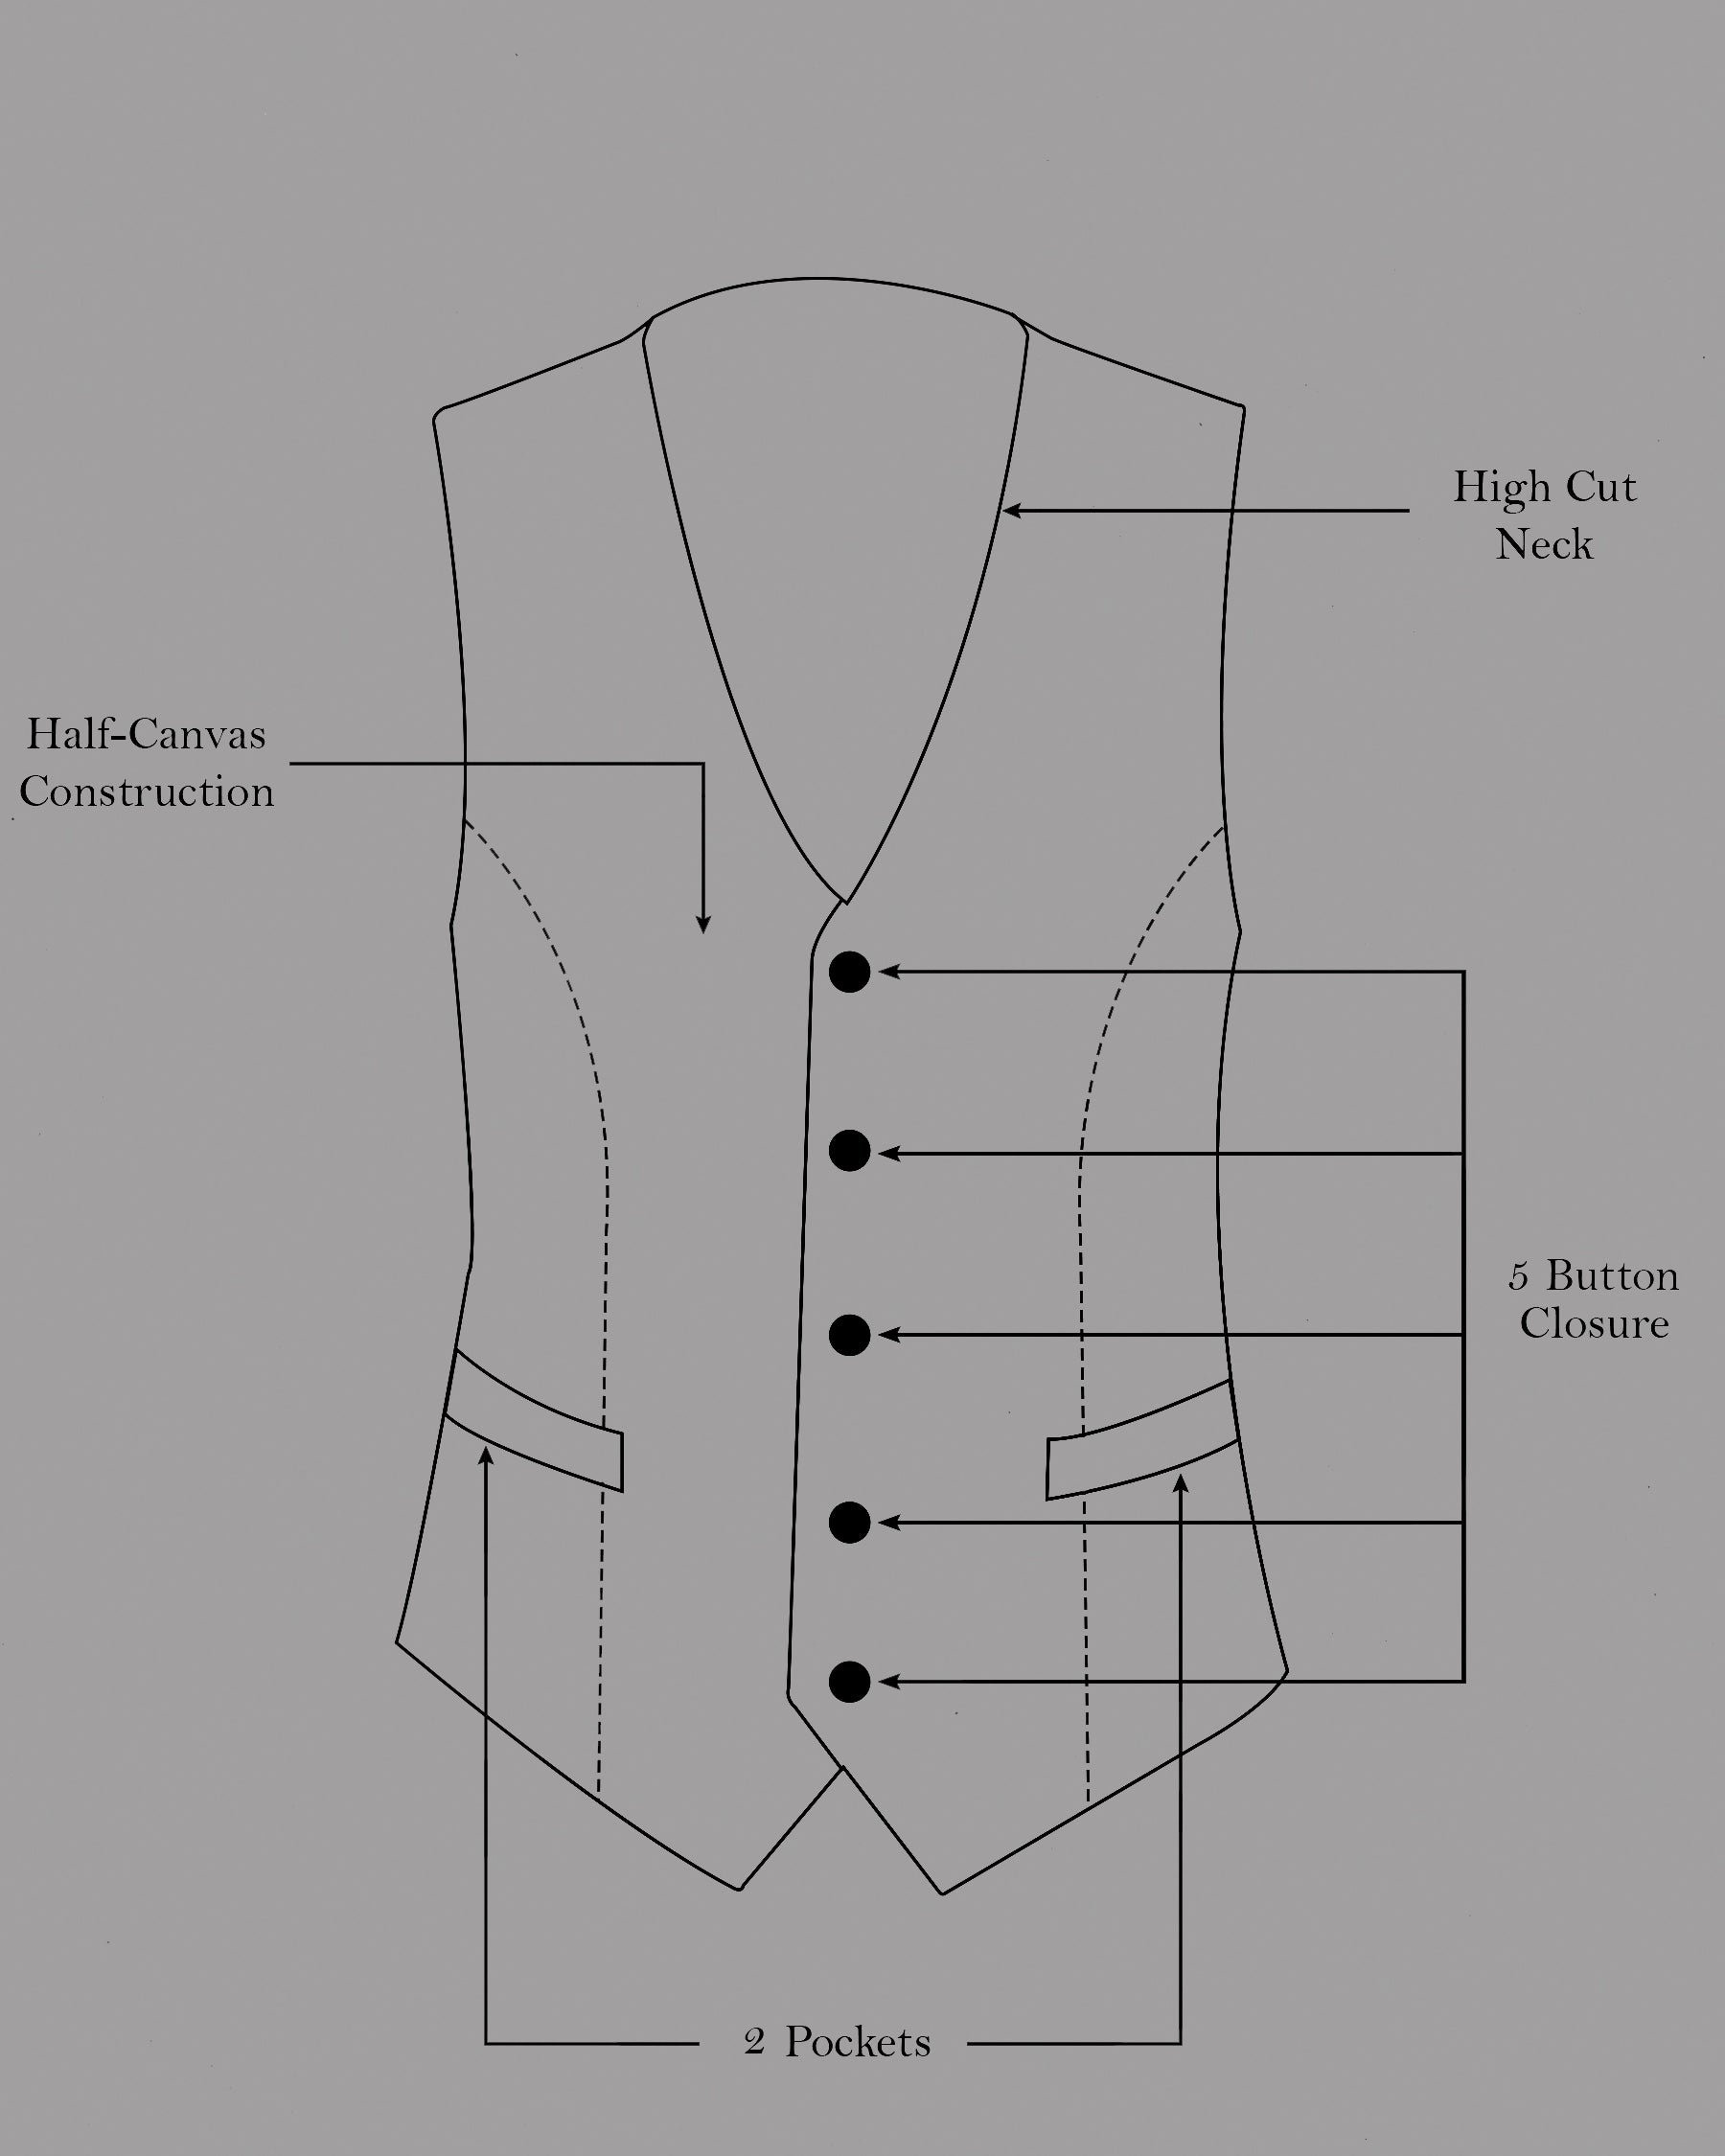 Iridium Gray Double-Breasted Suit